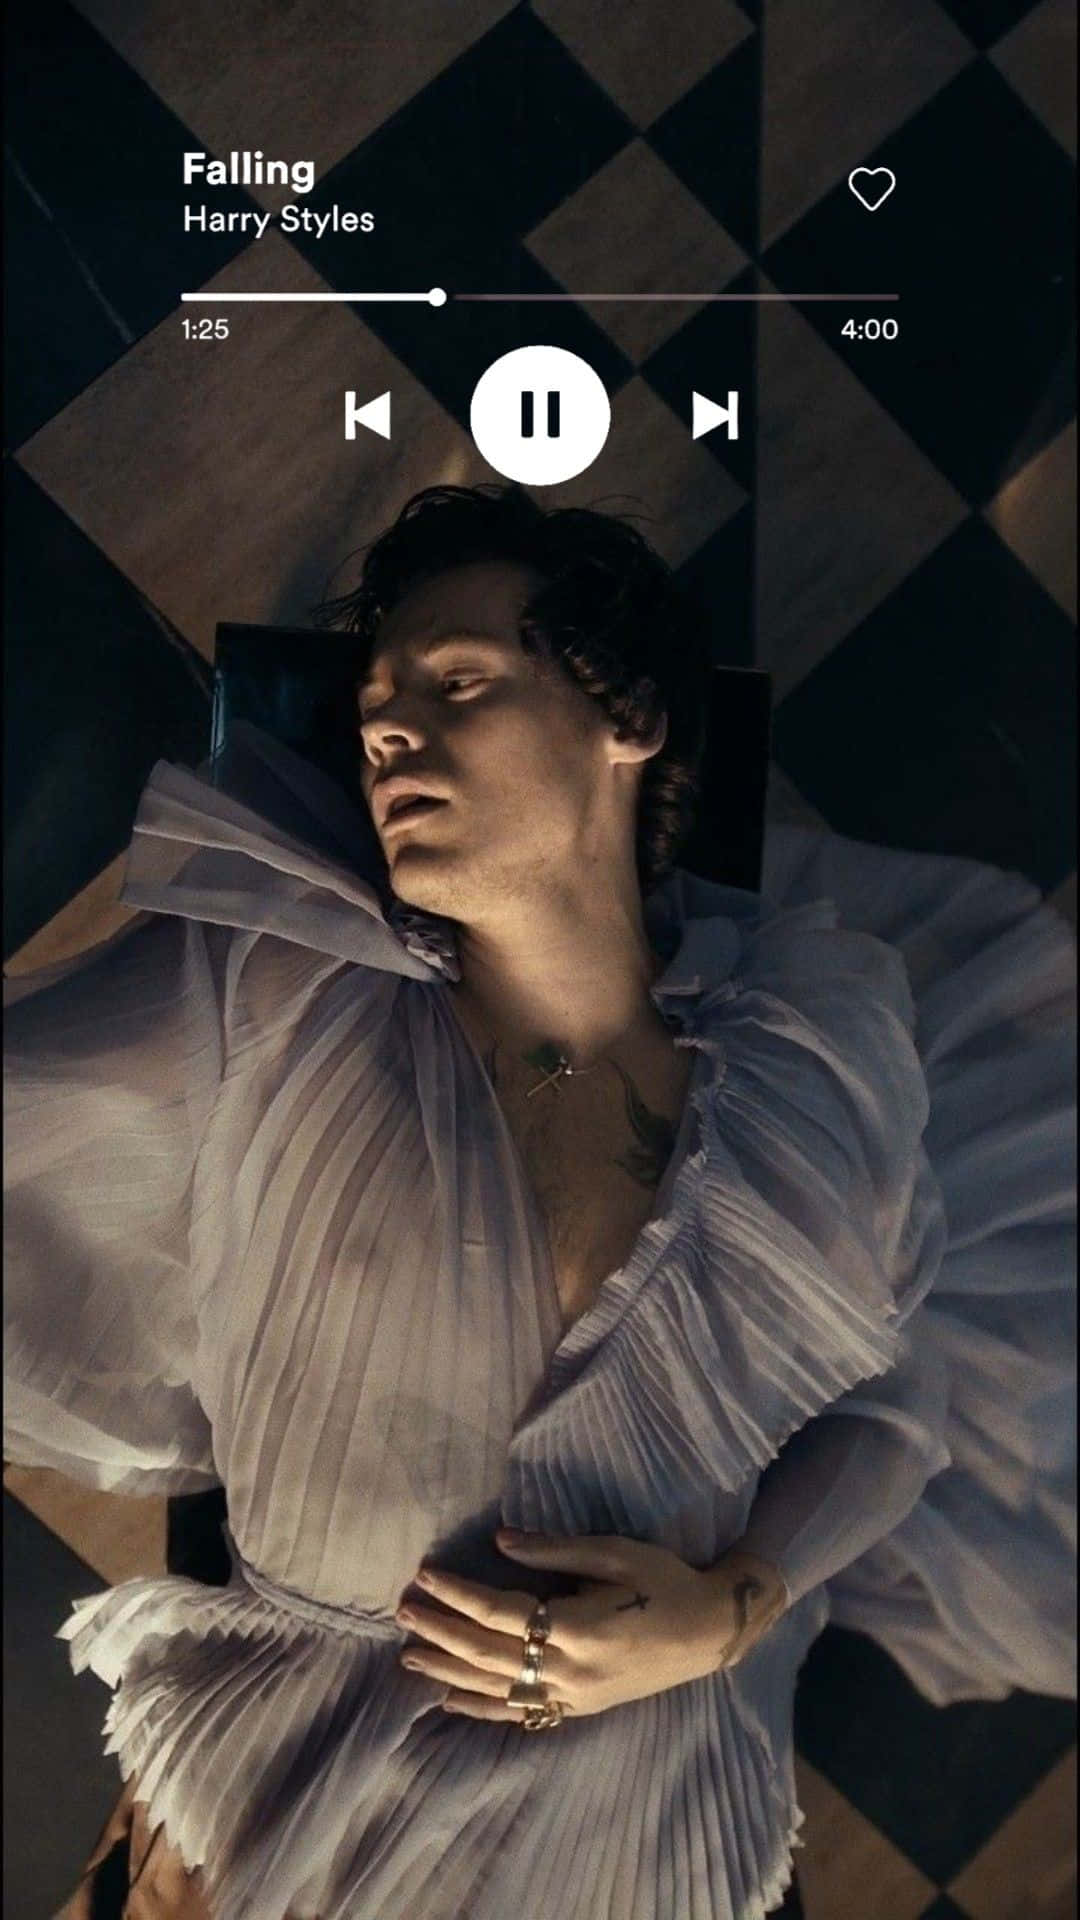 Download Harry Styles Album Cover Wallpaper 